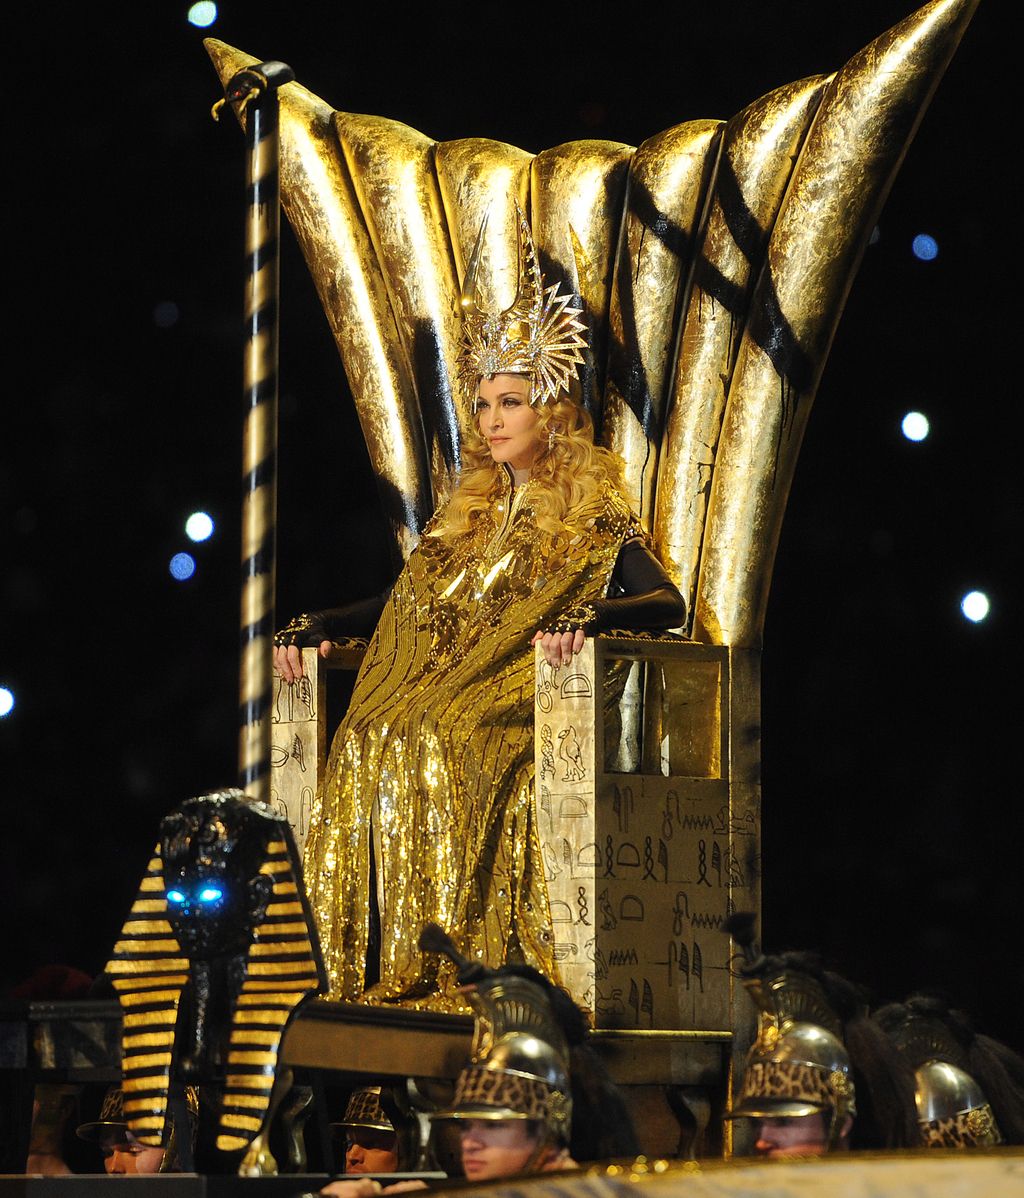 La reina del pop de Israel se llama Esther, alias Madonna